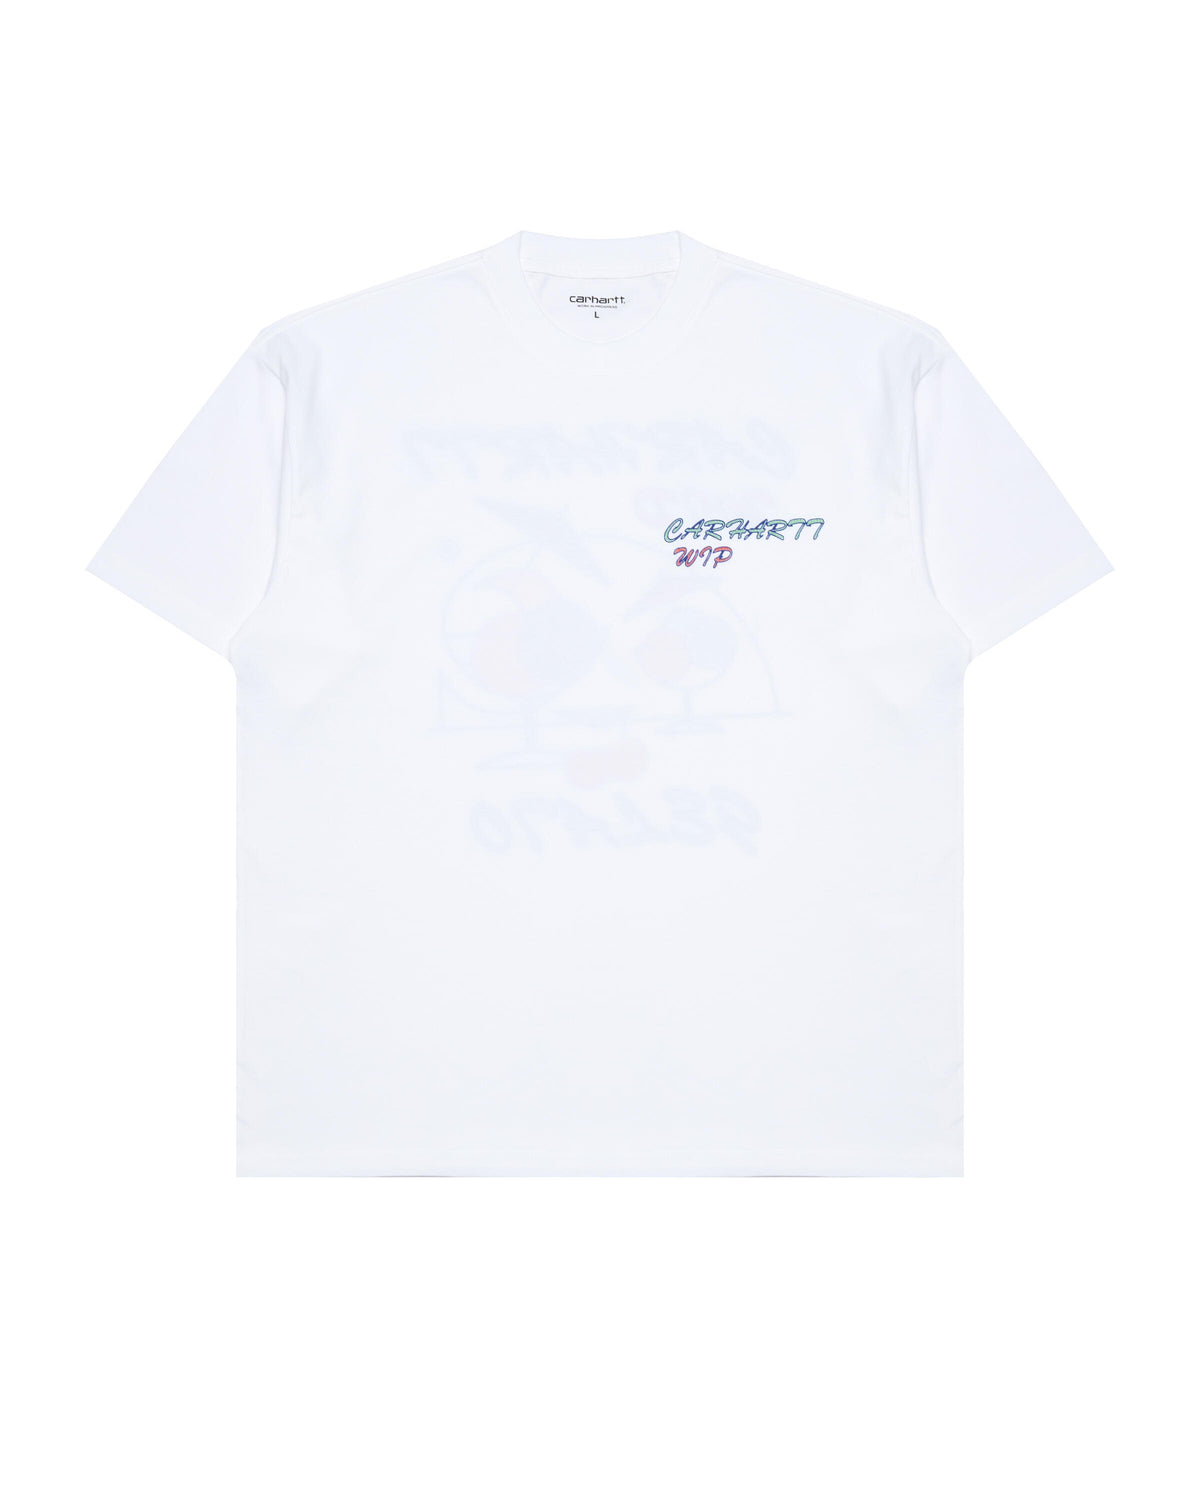 Carhartt WIP Gelato T-Shirt